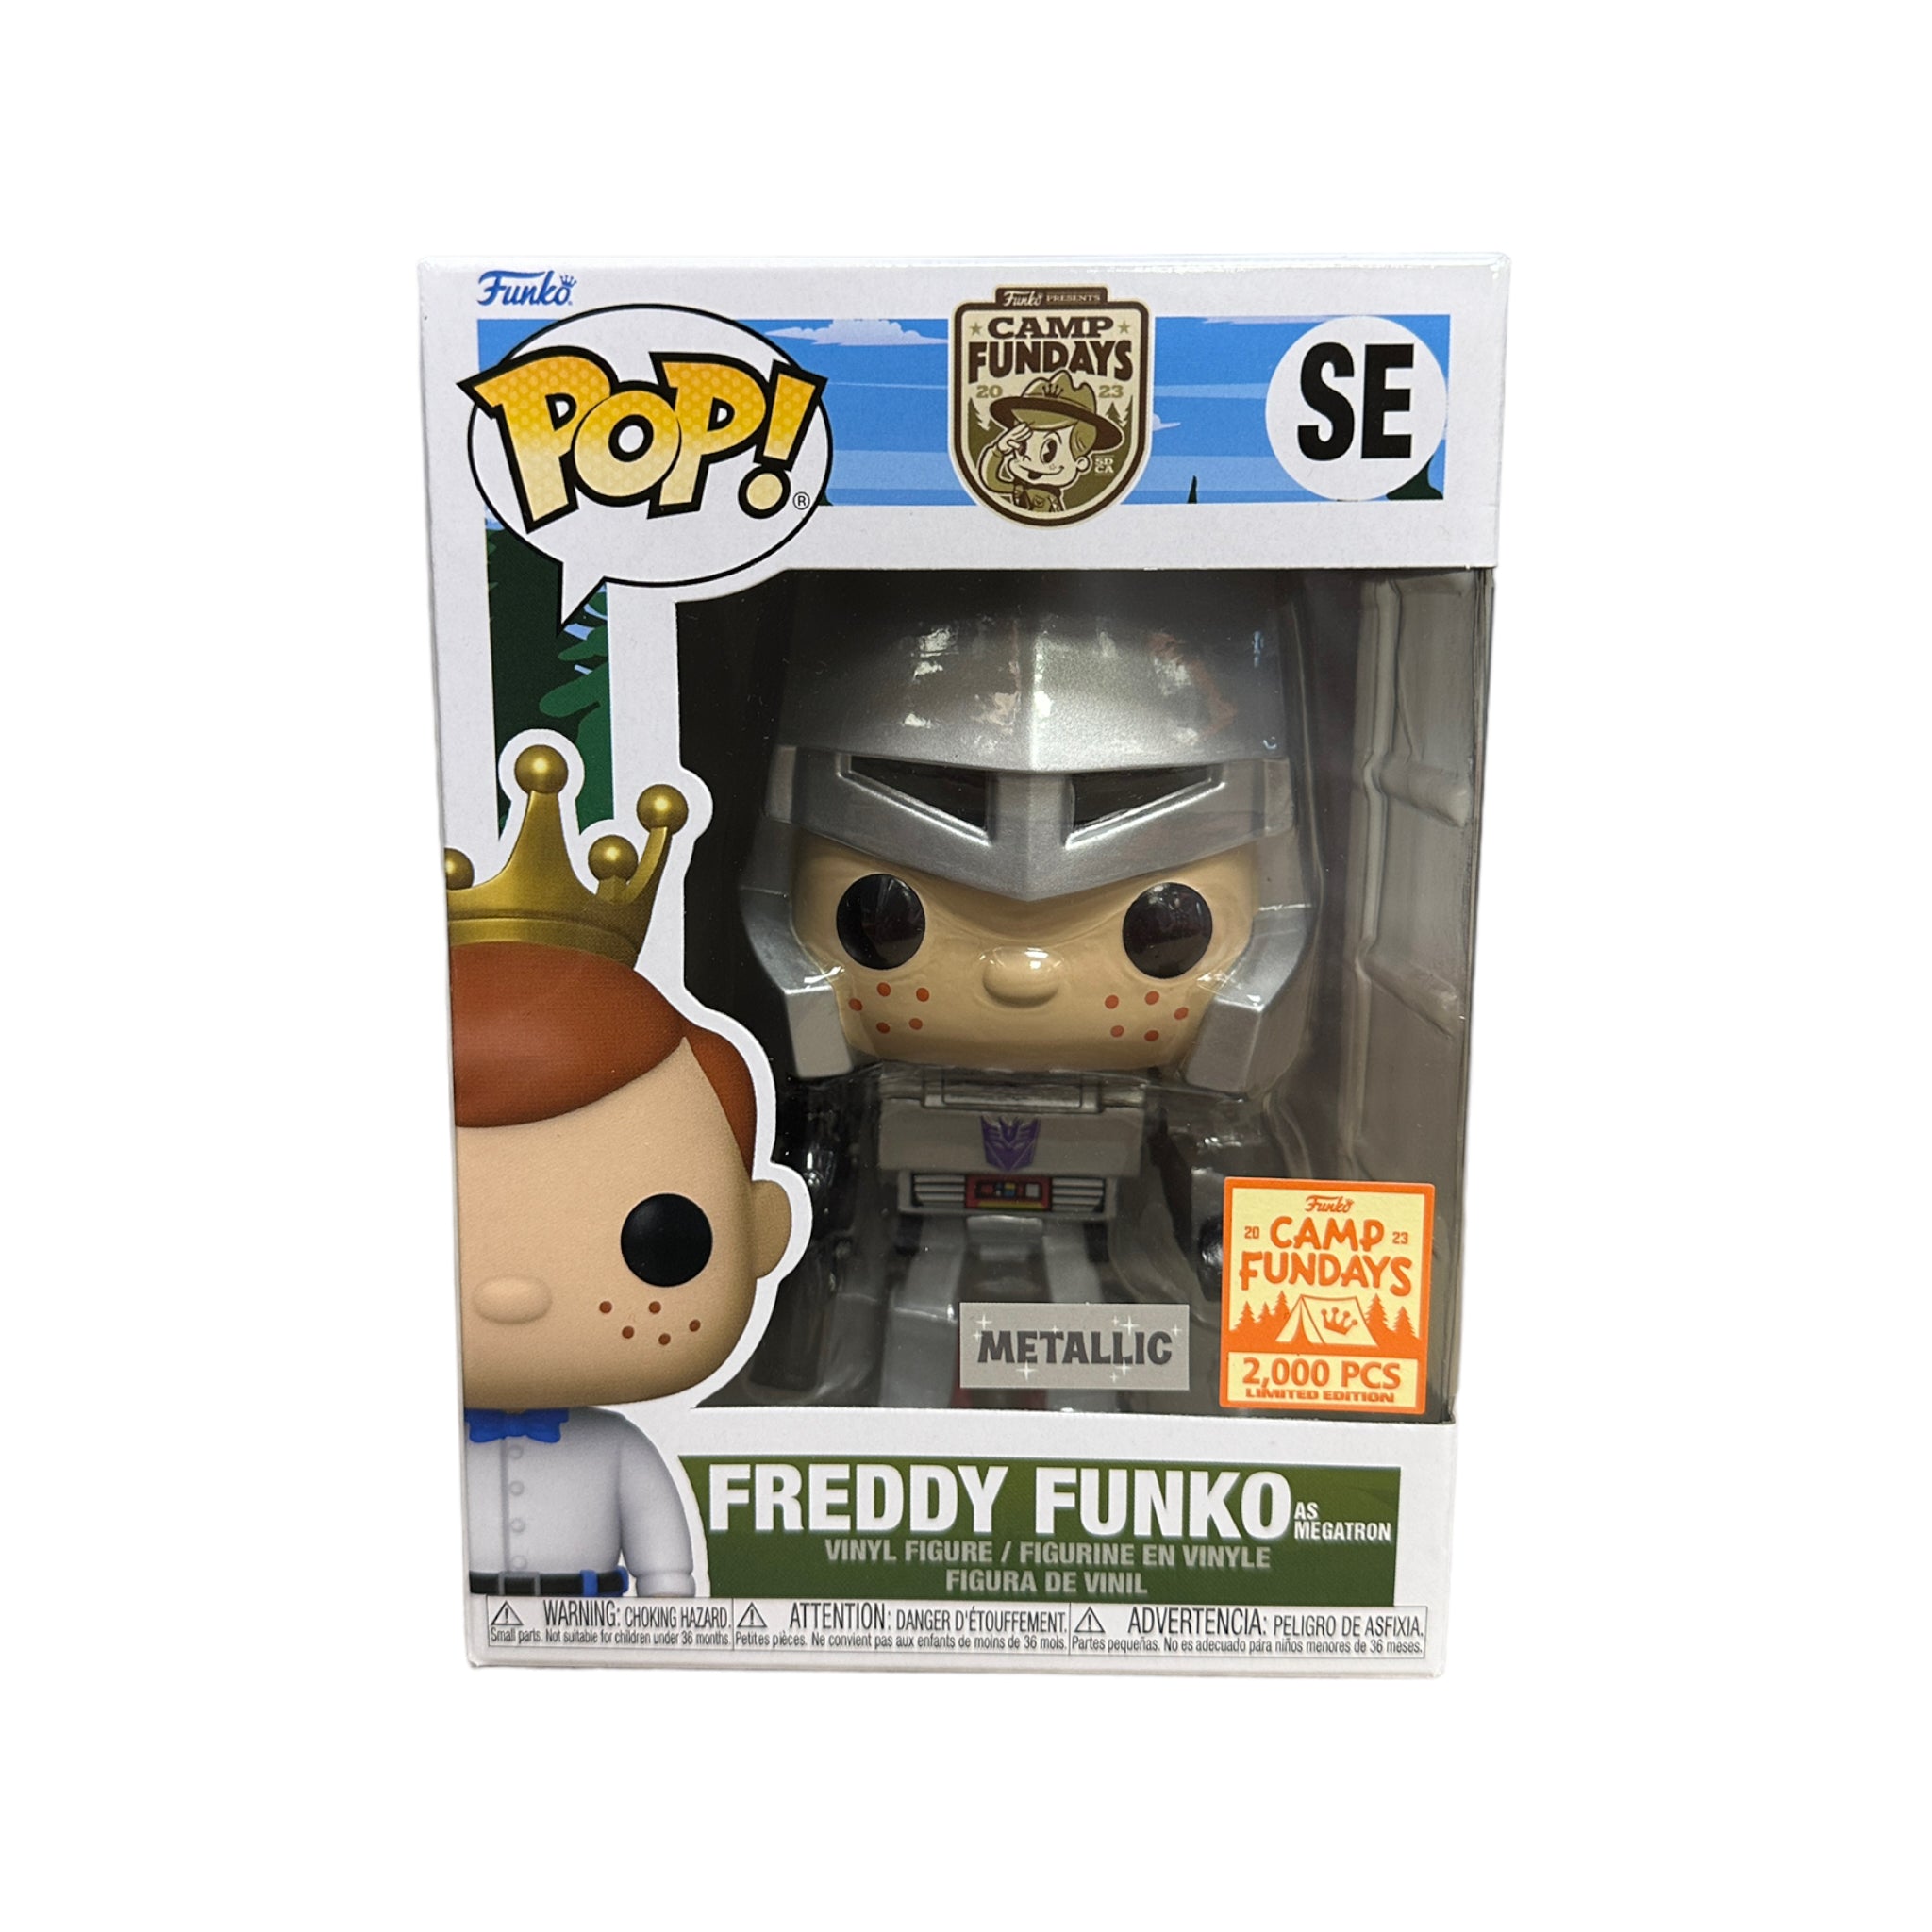 Freddy Funko as Megatron (Metallic) Funko Pop! - Transformers - Camp Fundays 2023 Exclusive LE2000 Pcs - Condition 8.5/10